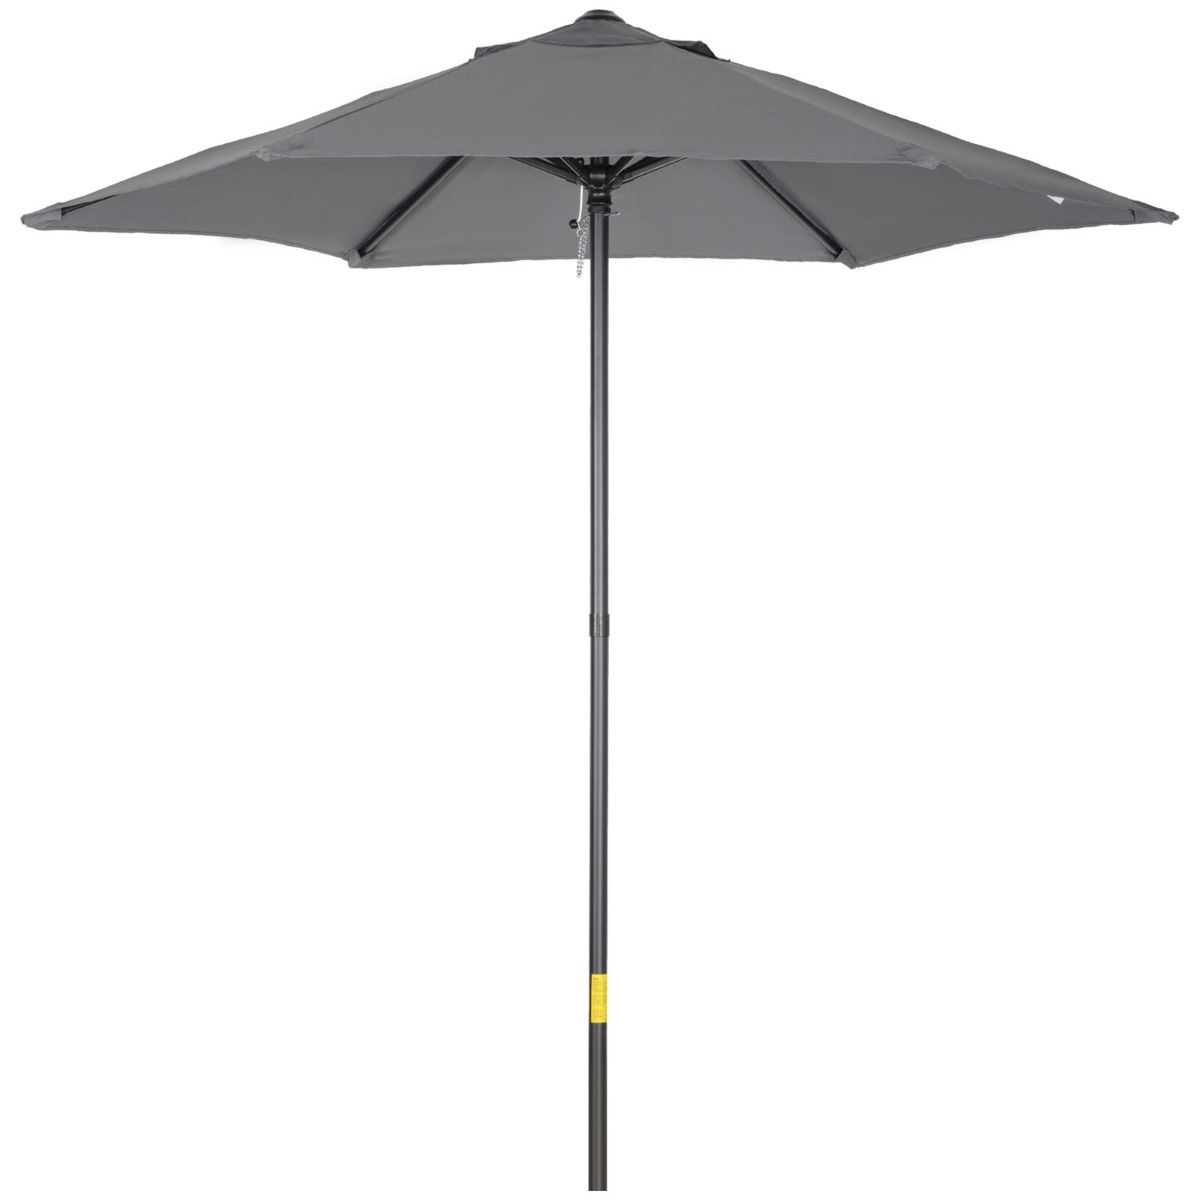 Outsunny Patio Parasol Umbrella, Charcoal - 1.96m